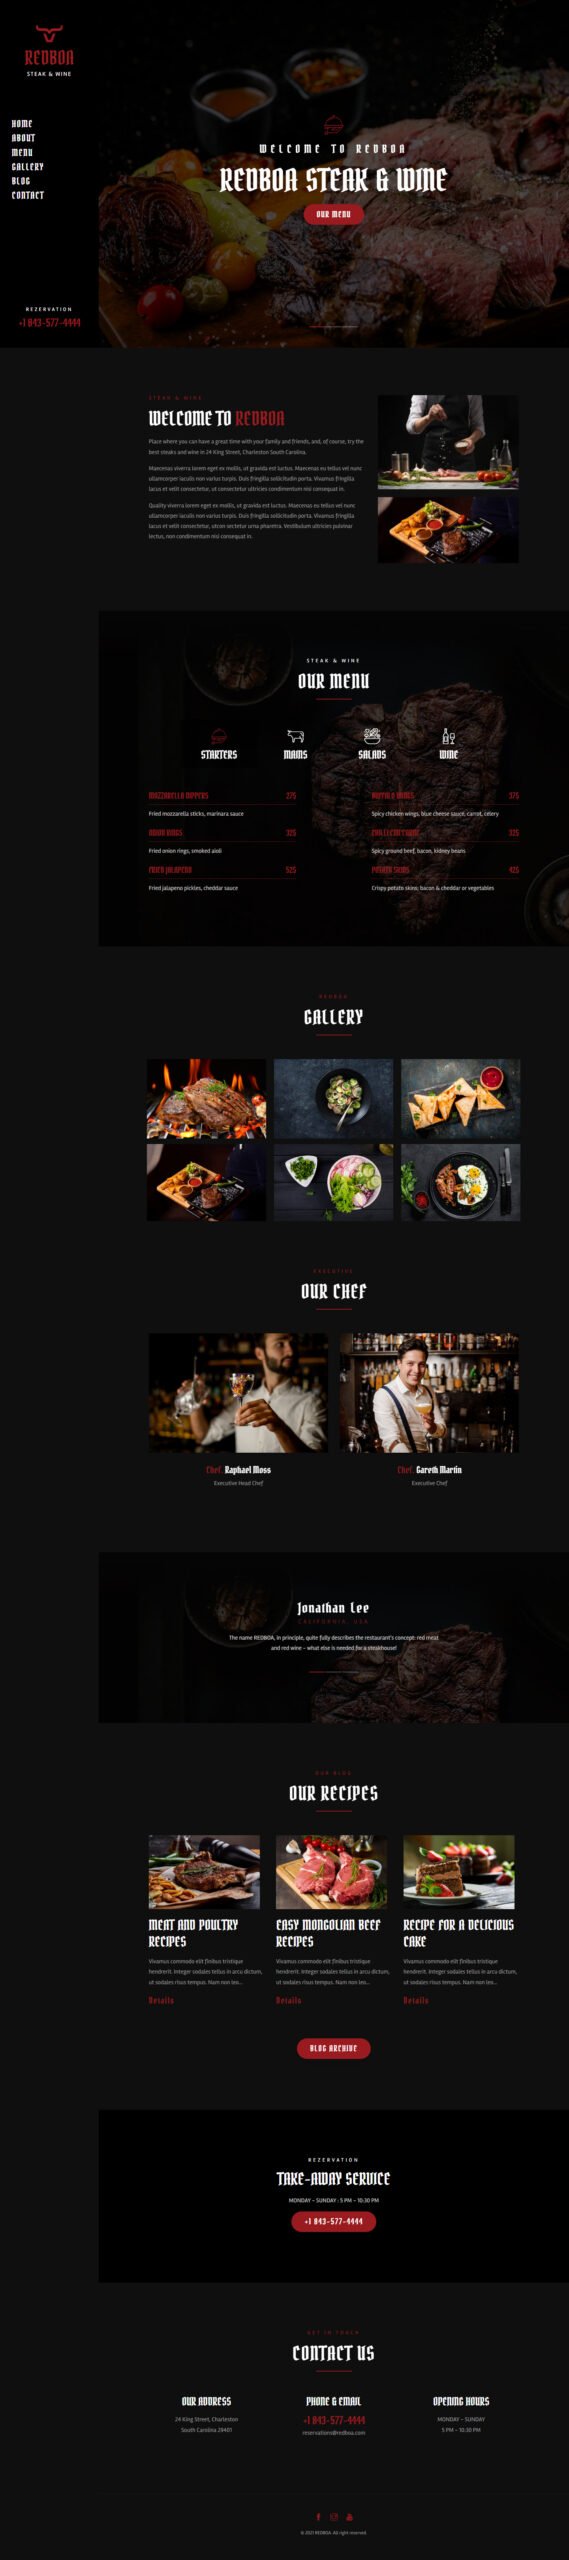 Webdesign restaurant website portfolio